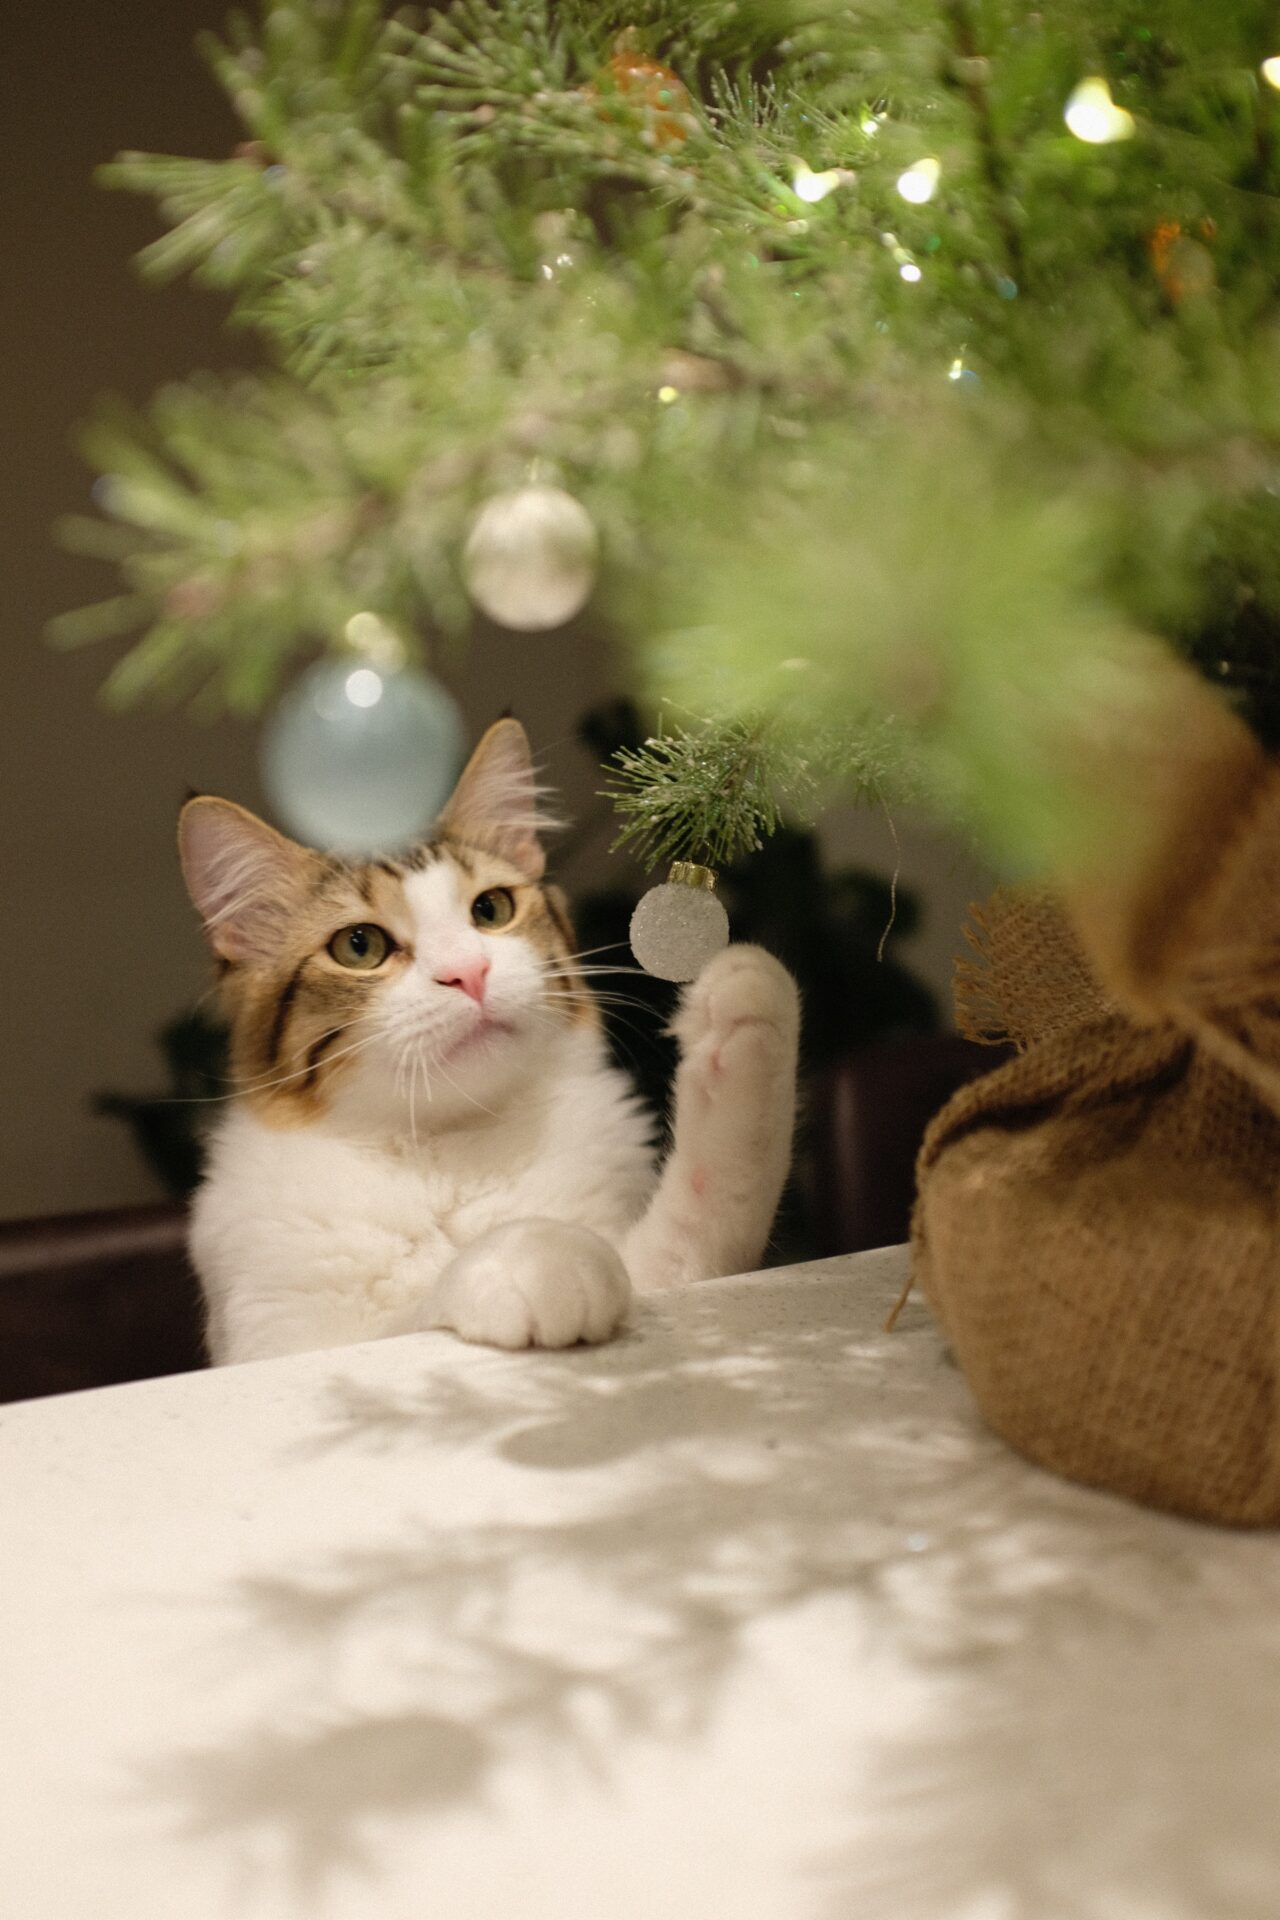 Kitty pawing at Christmas Tree ornaments.